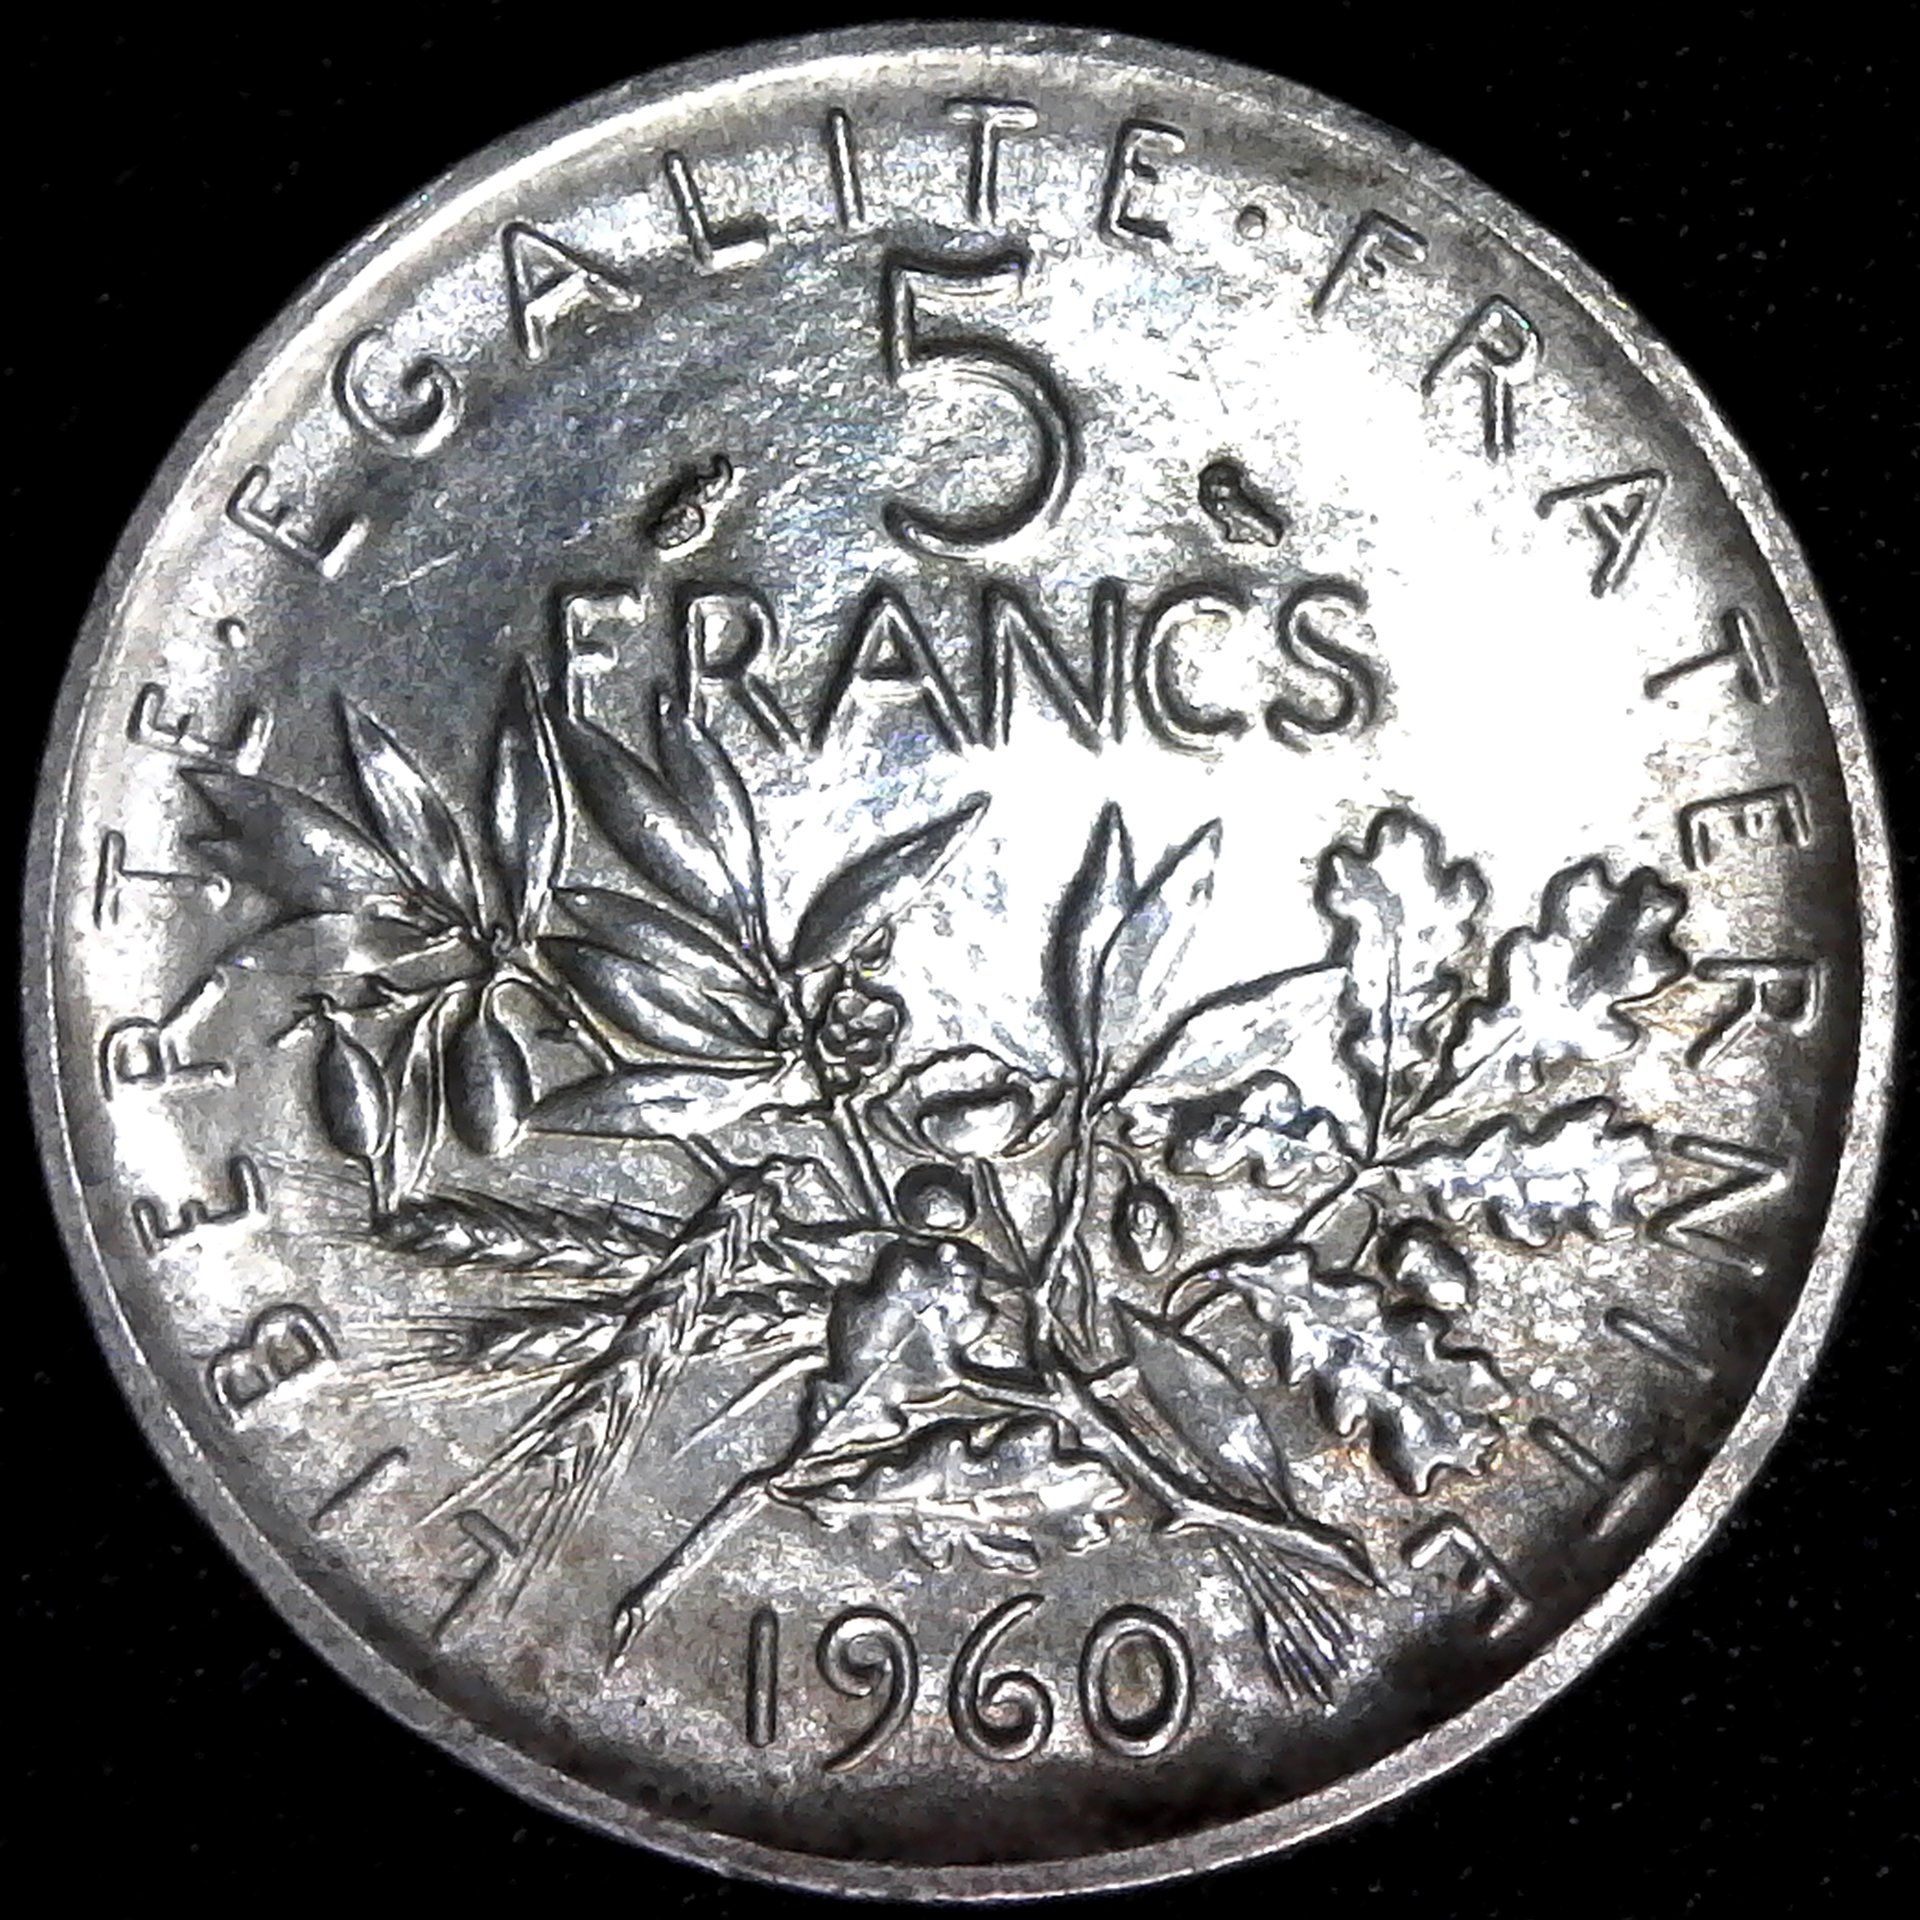 France 5 Francs 1960 obv B.jpg